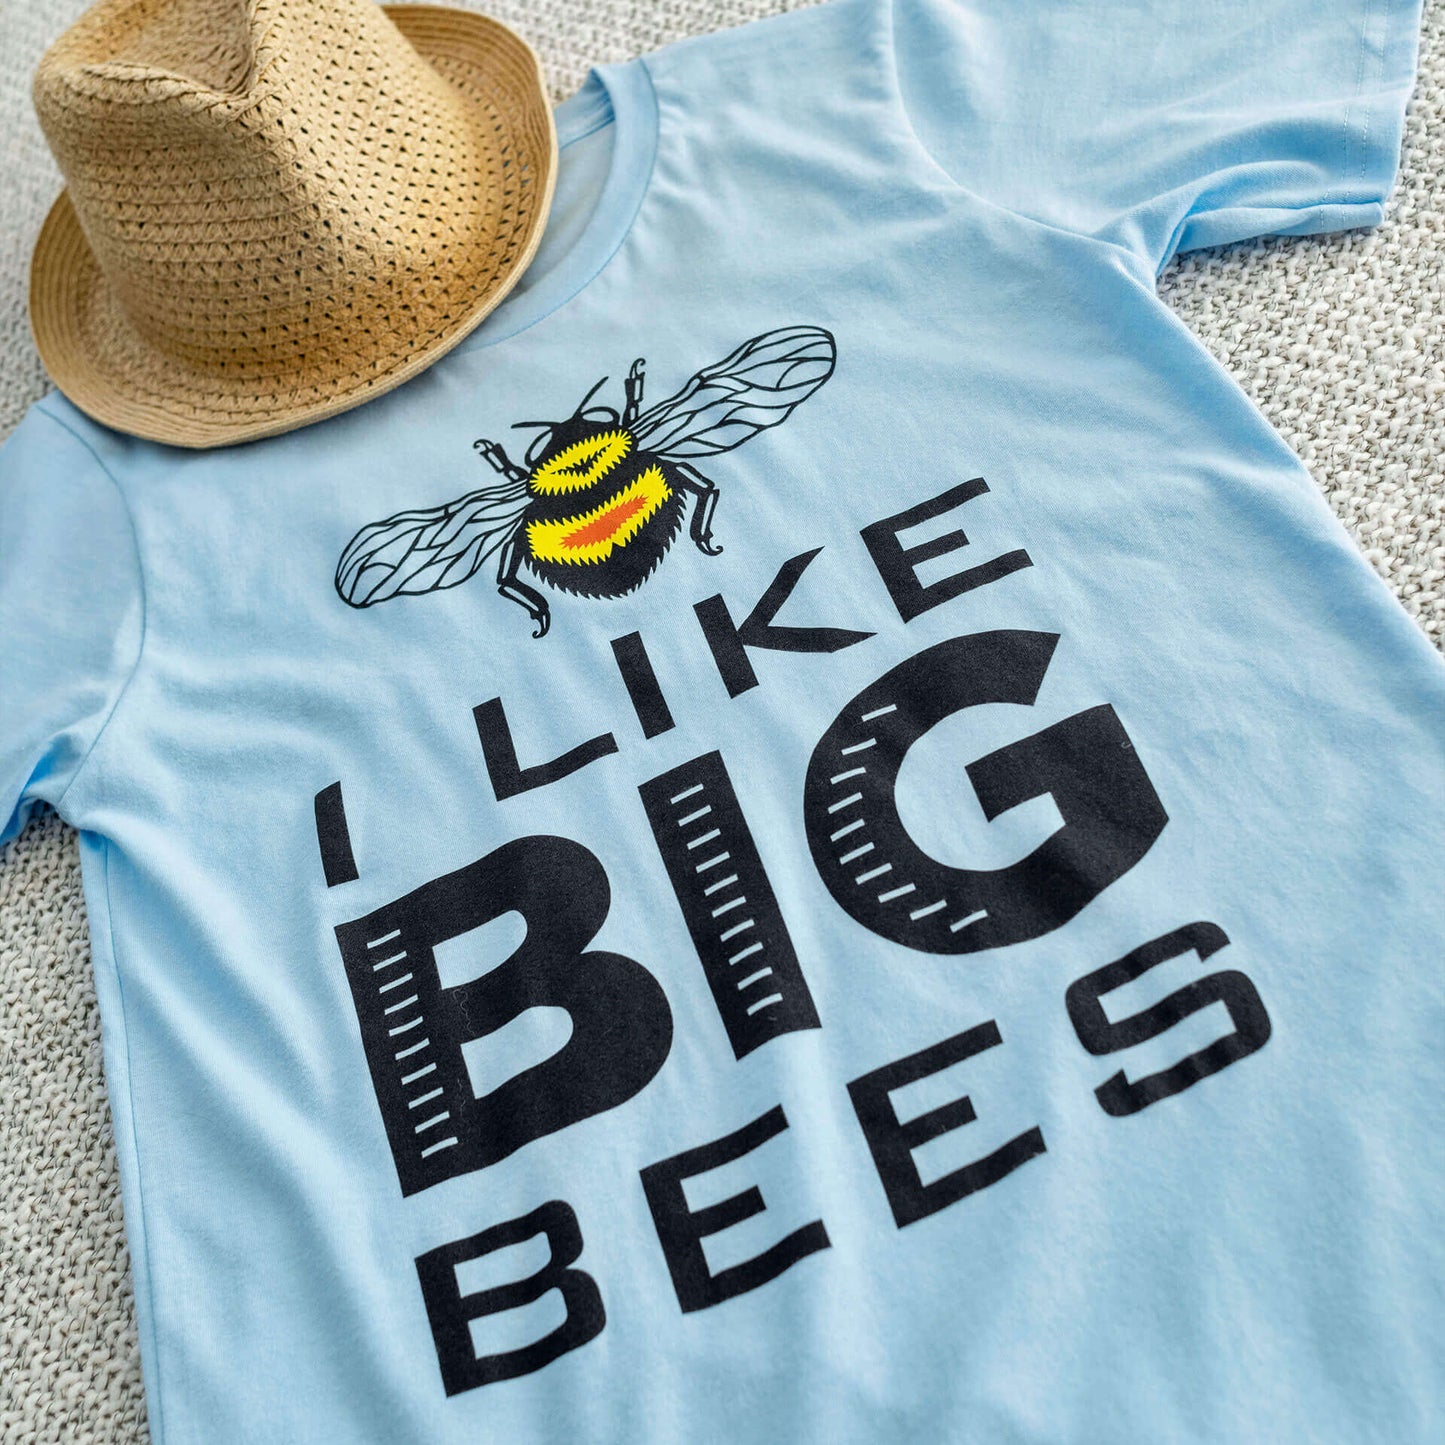 I Like Big Bees T-shirt